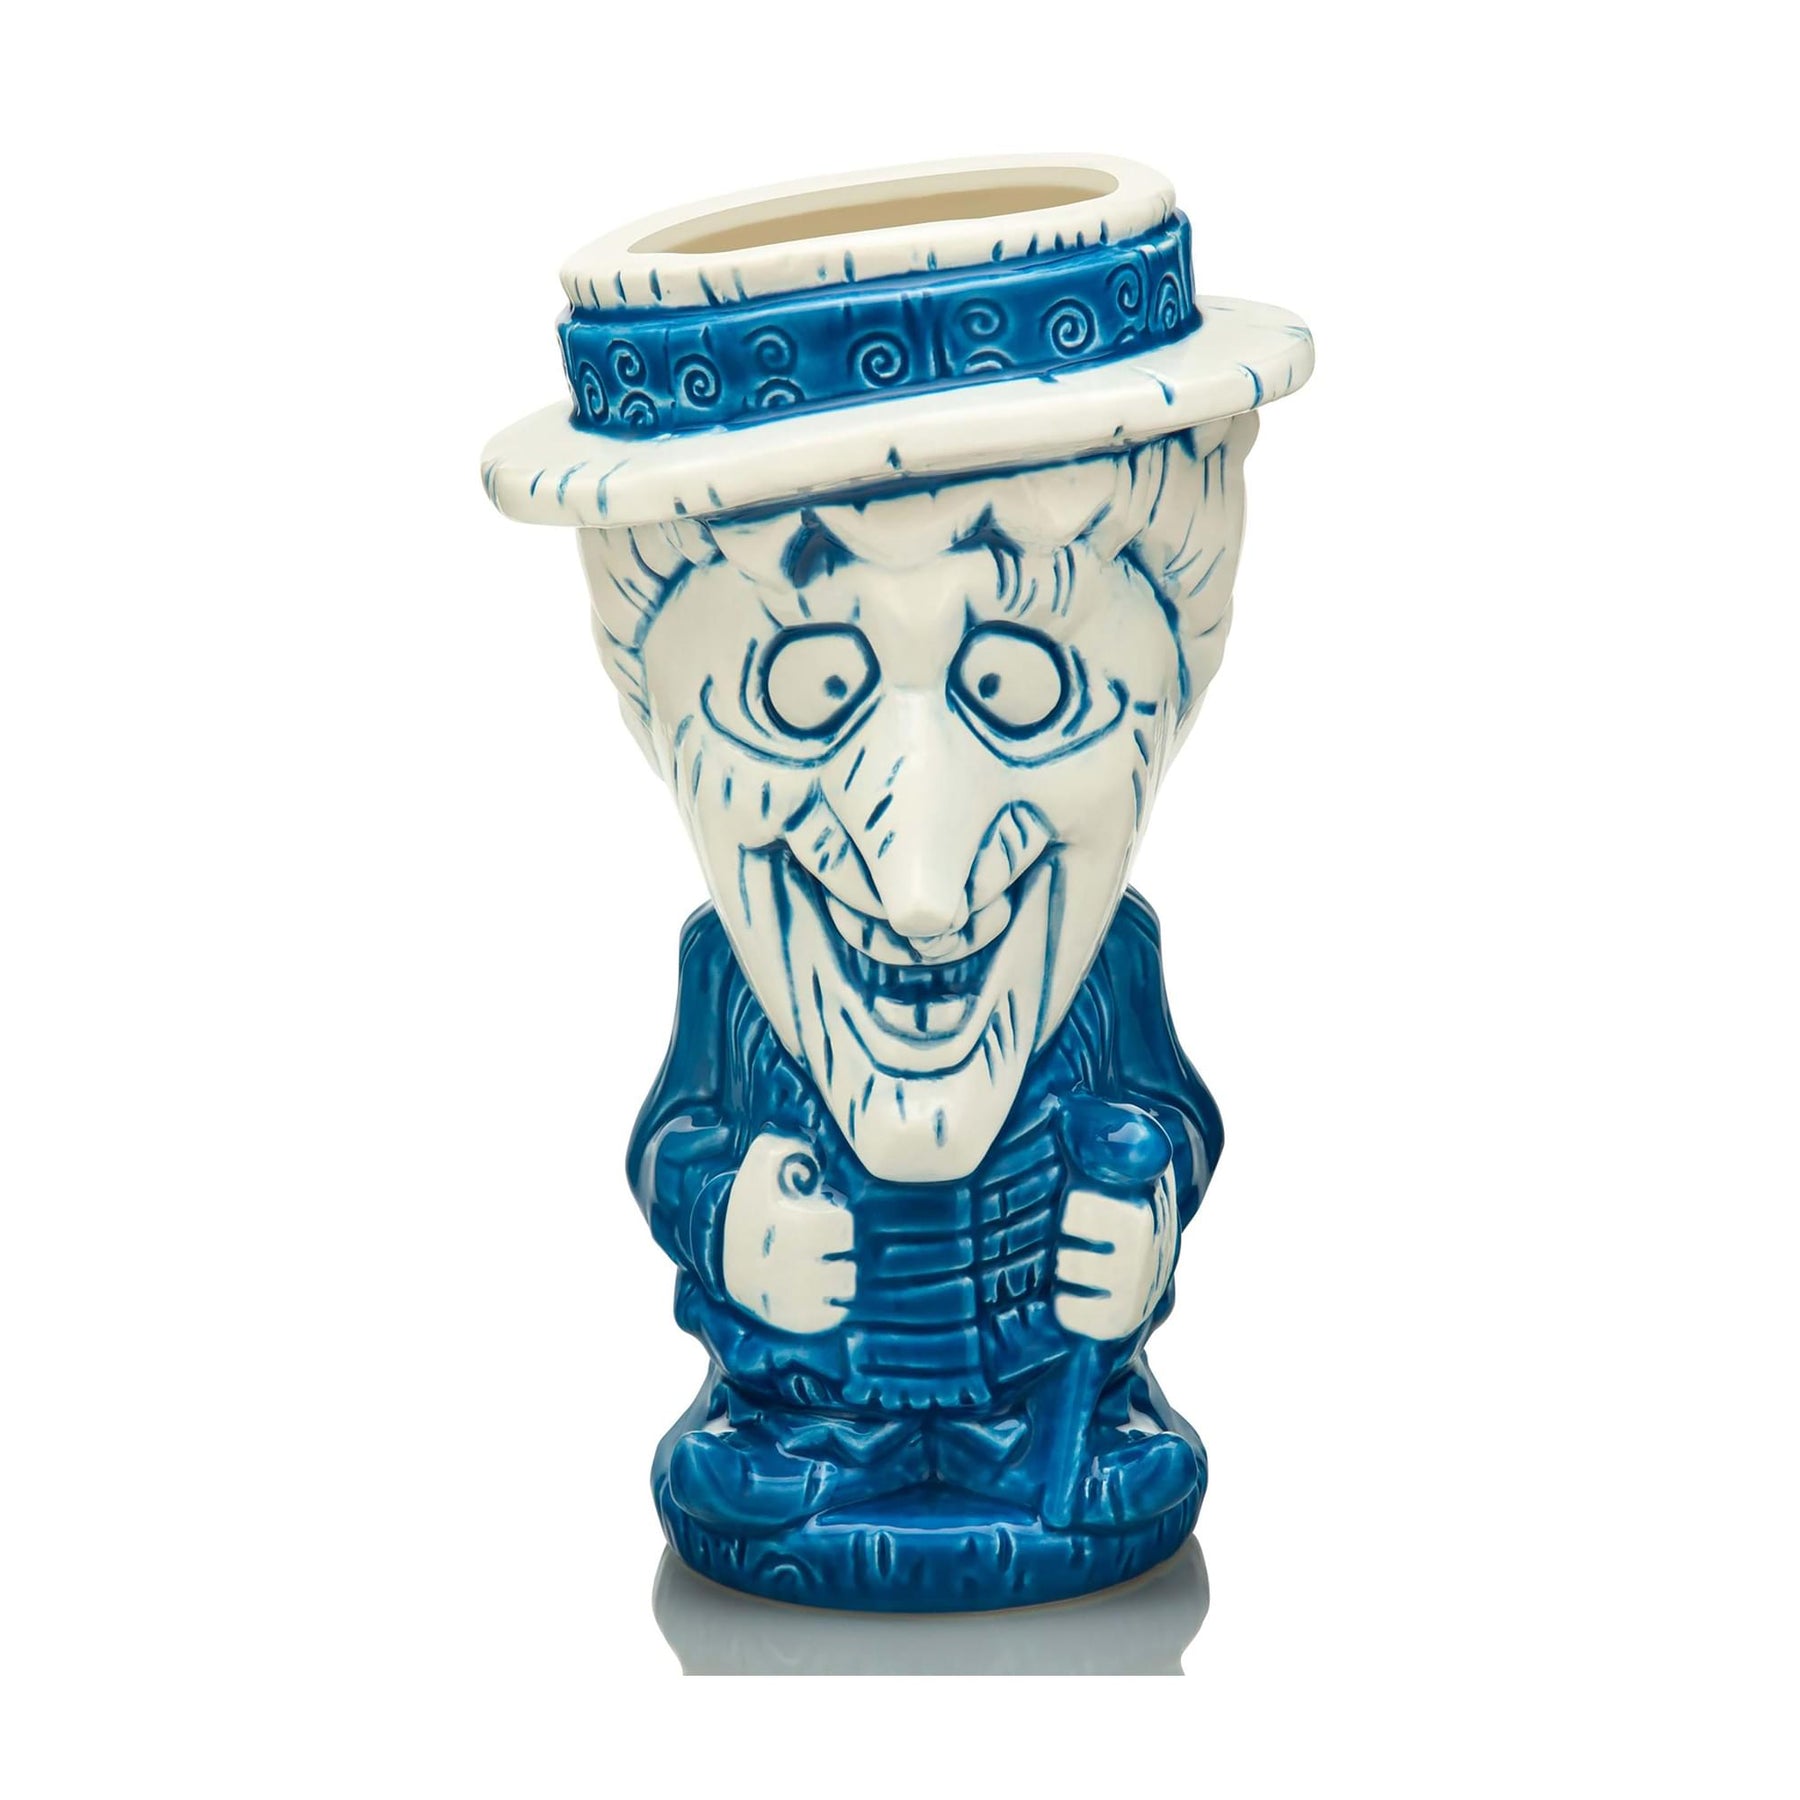 Geeki Tiki The Year Without a Santa Claus Snow Miser 17 Ounce Ceramic Mug